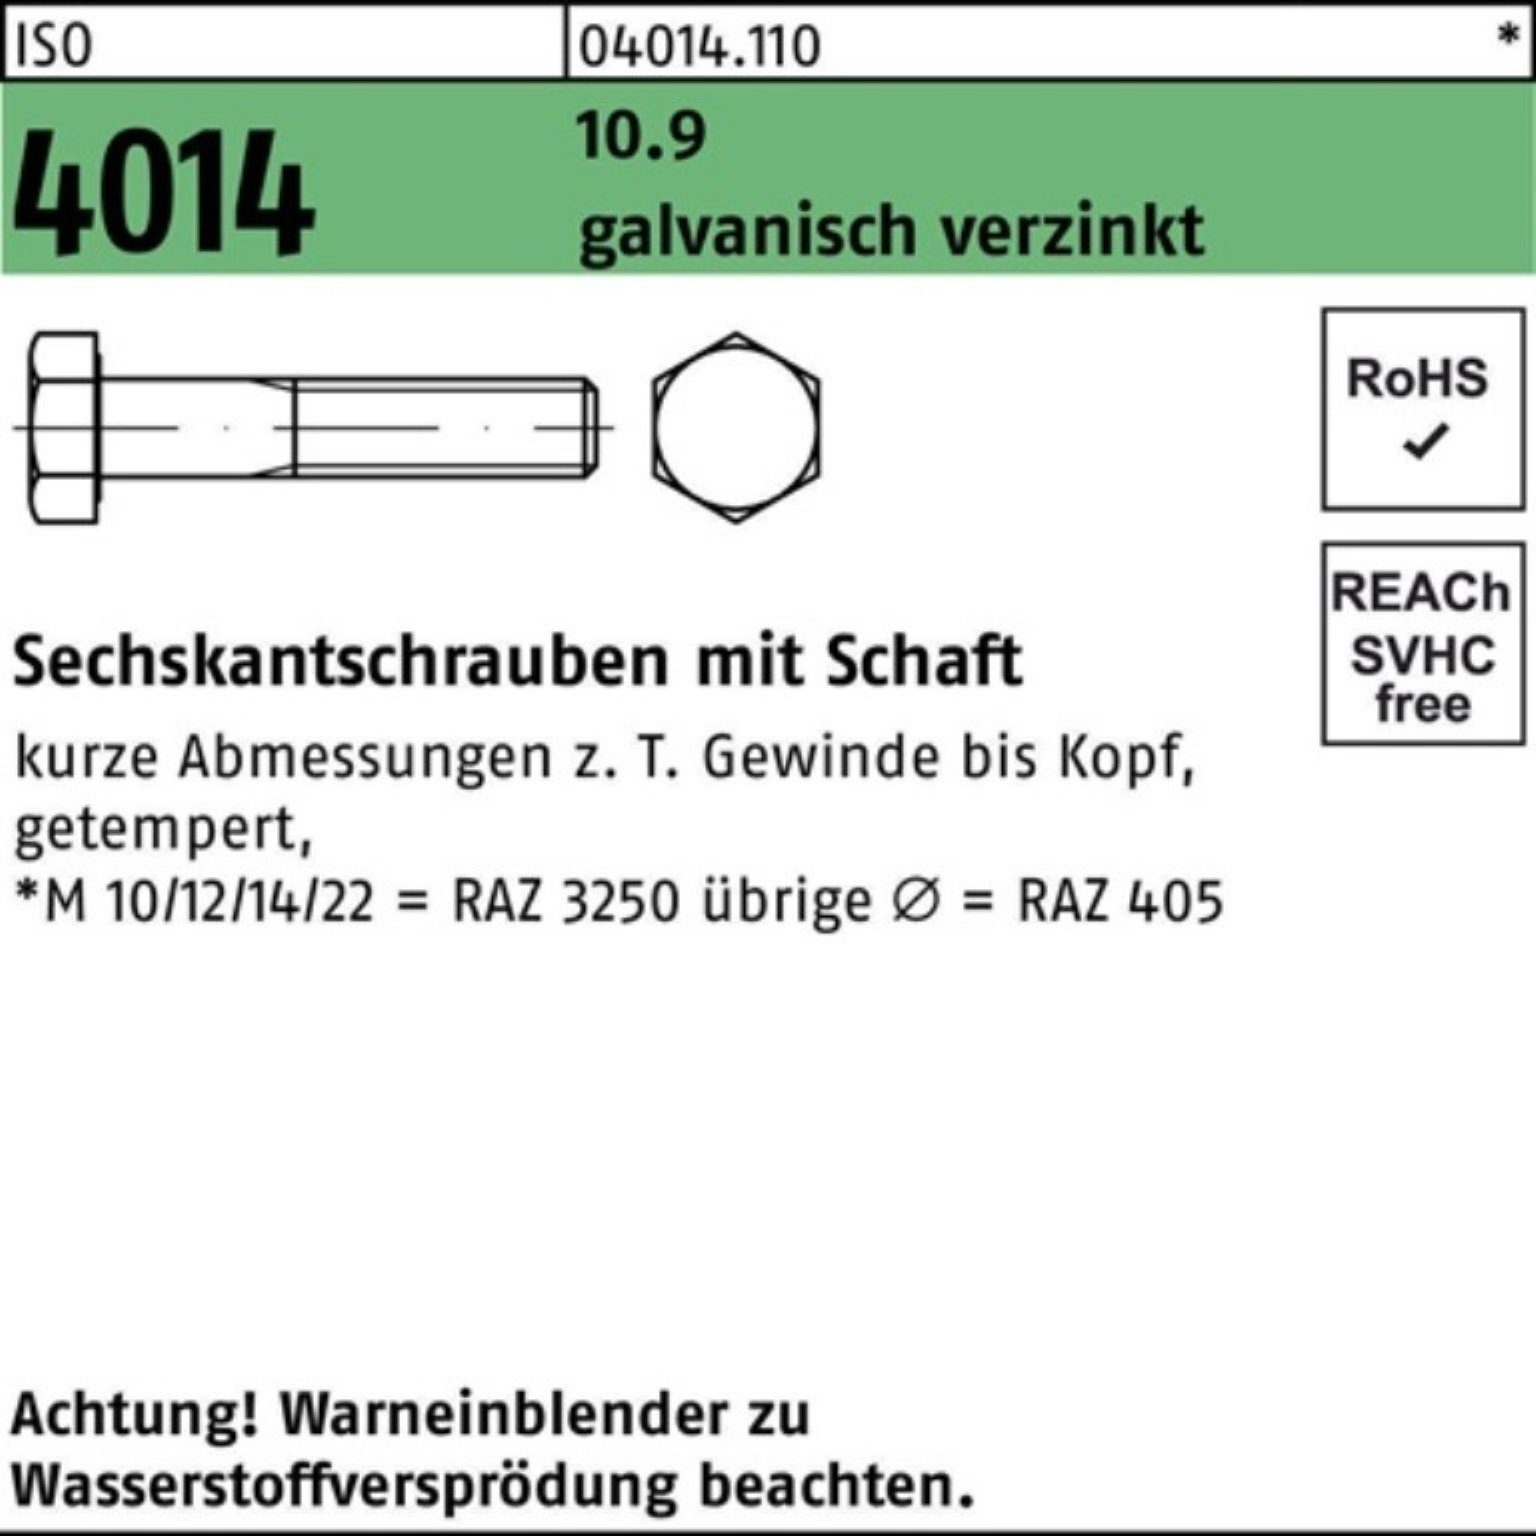 Bufab Sechskantschraube 100er Pack Sechskantschraube ISO 4014 Schaft M30x 140 10.9 galv.verz. | Schrauben